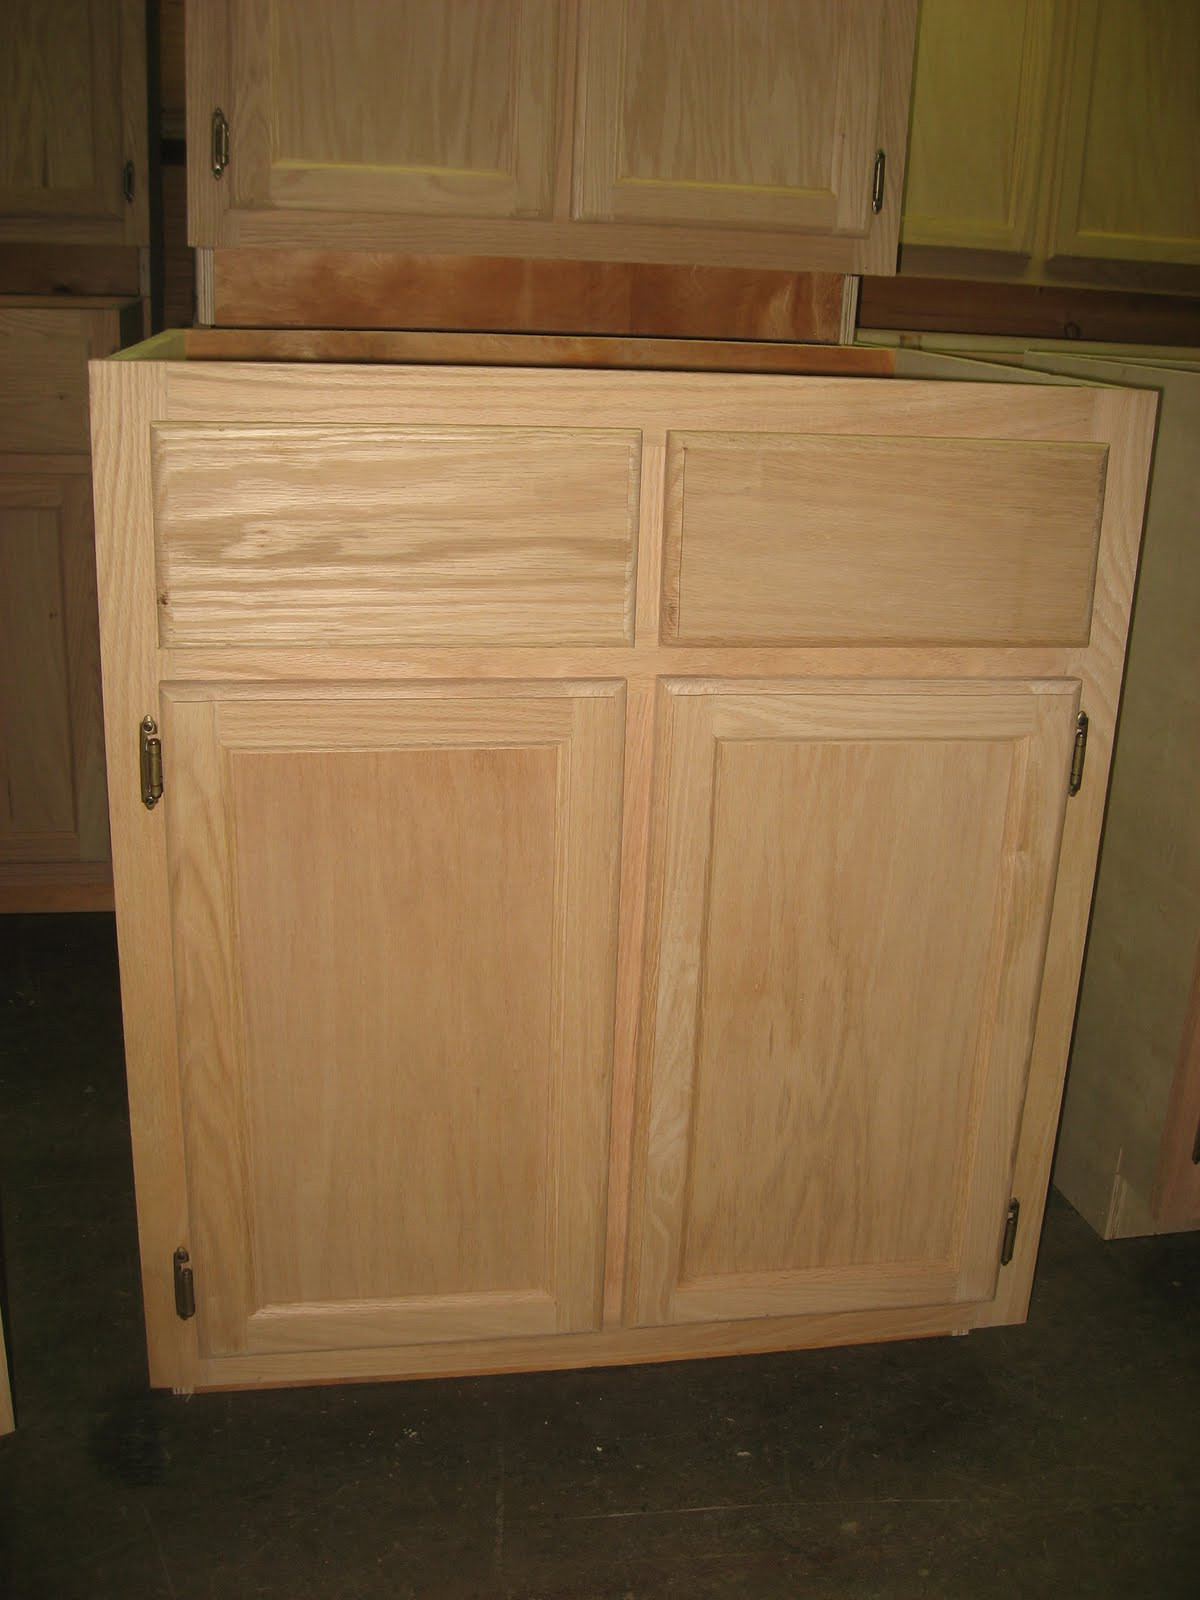 Unfinished Kitchen Cabinets
 Blue Ridge Surplus Oak Unfinished Cabinets